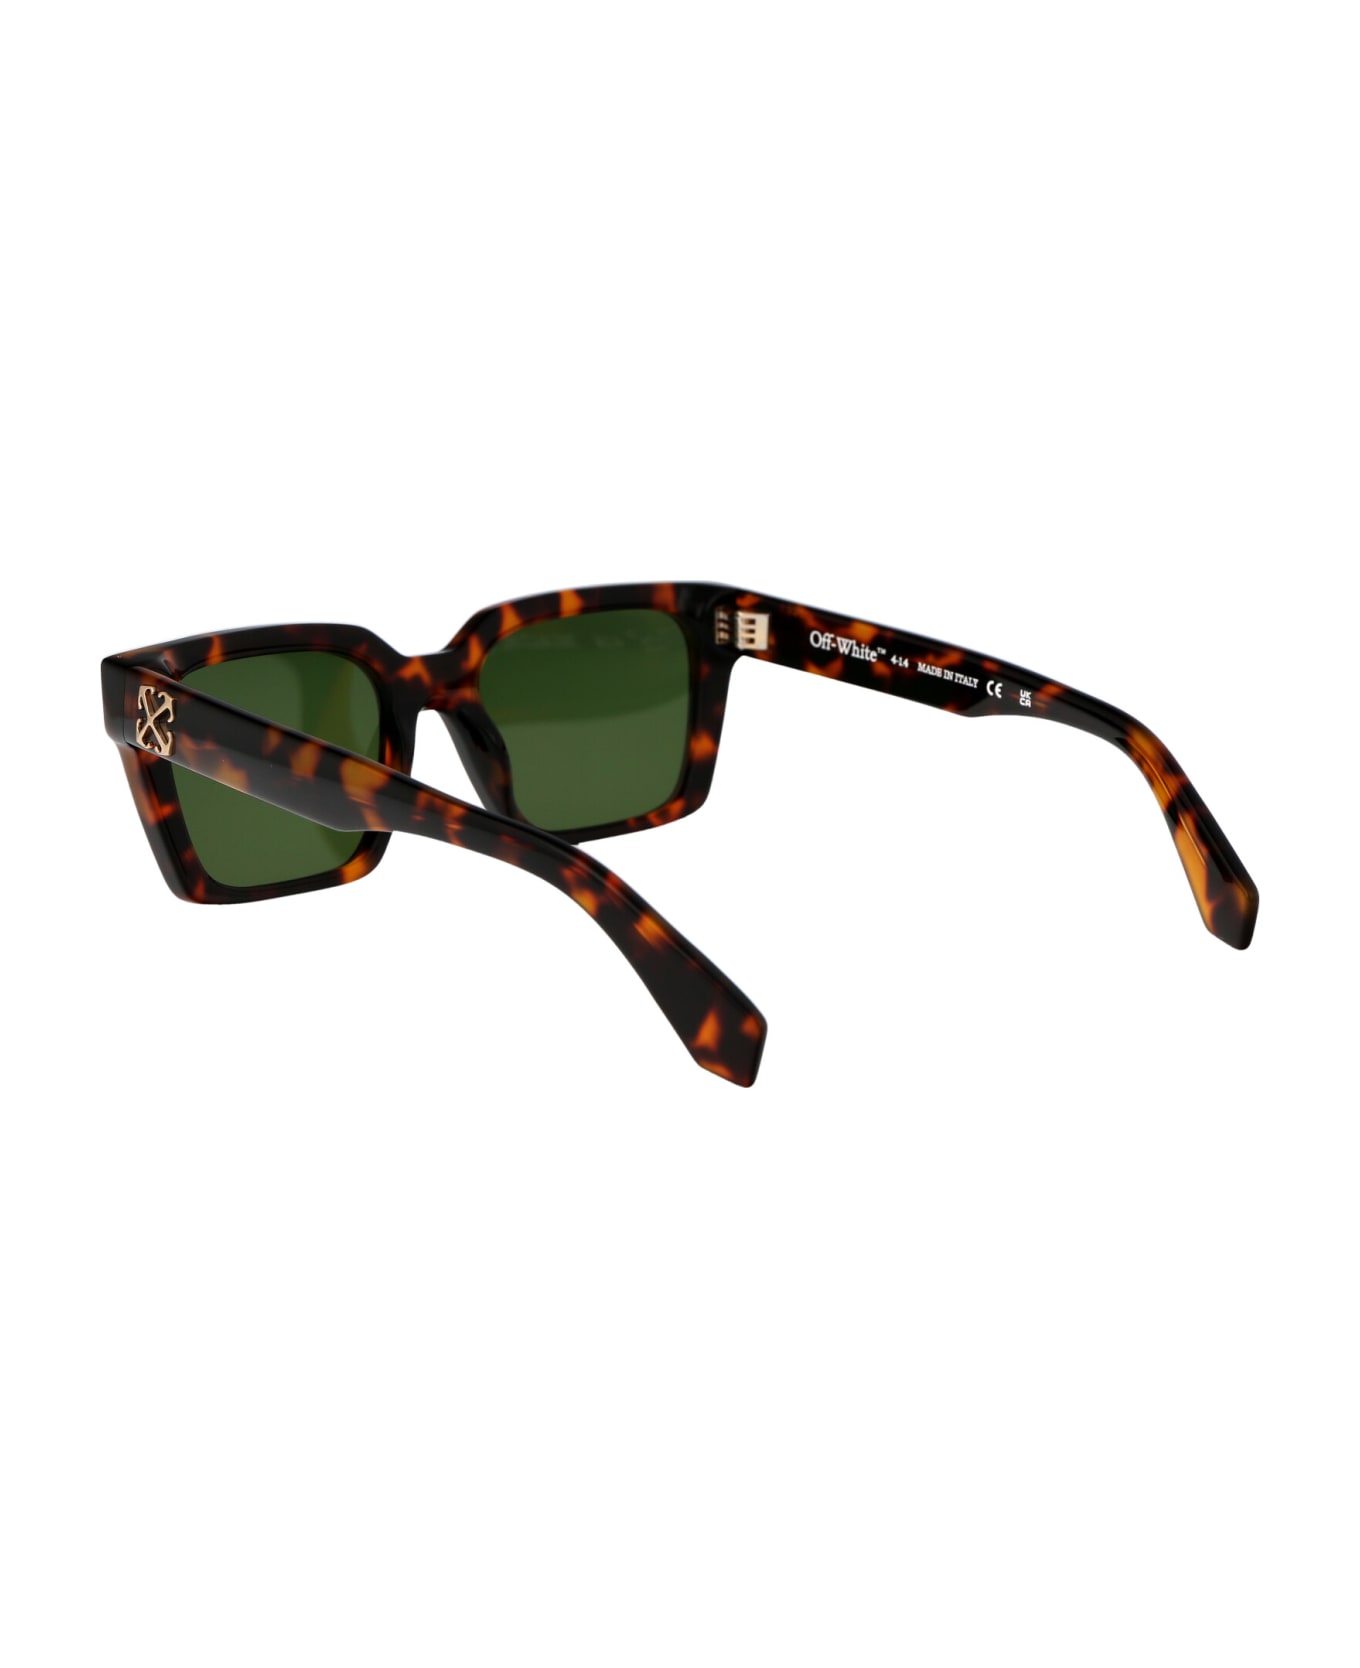 Off-White Branson Sunglasses - 6055 HAVANA サングラス